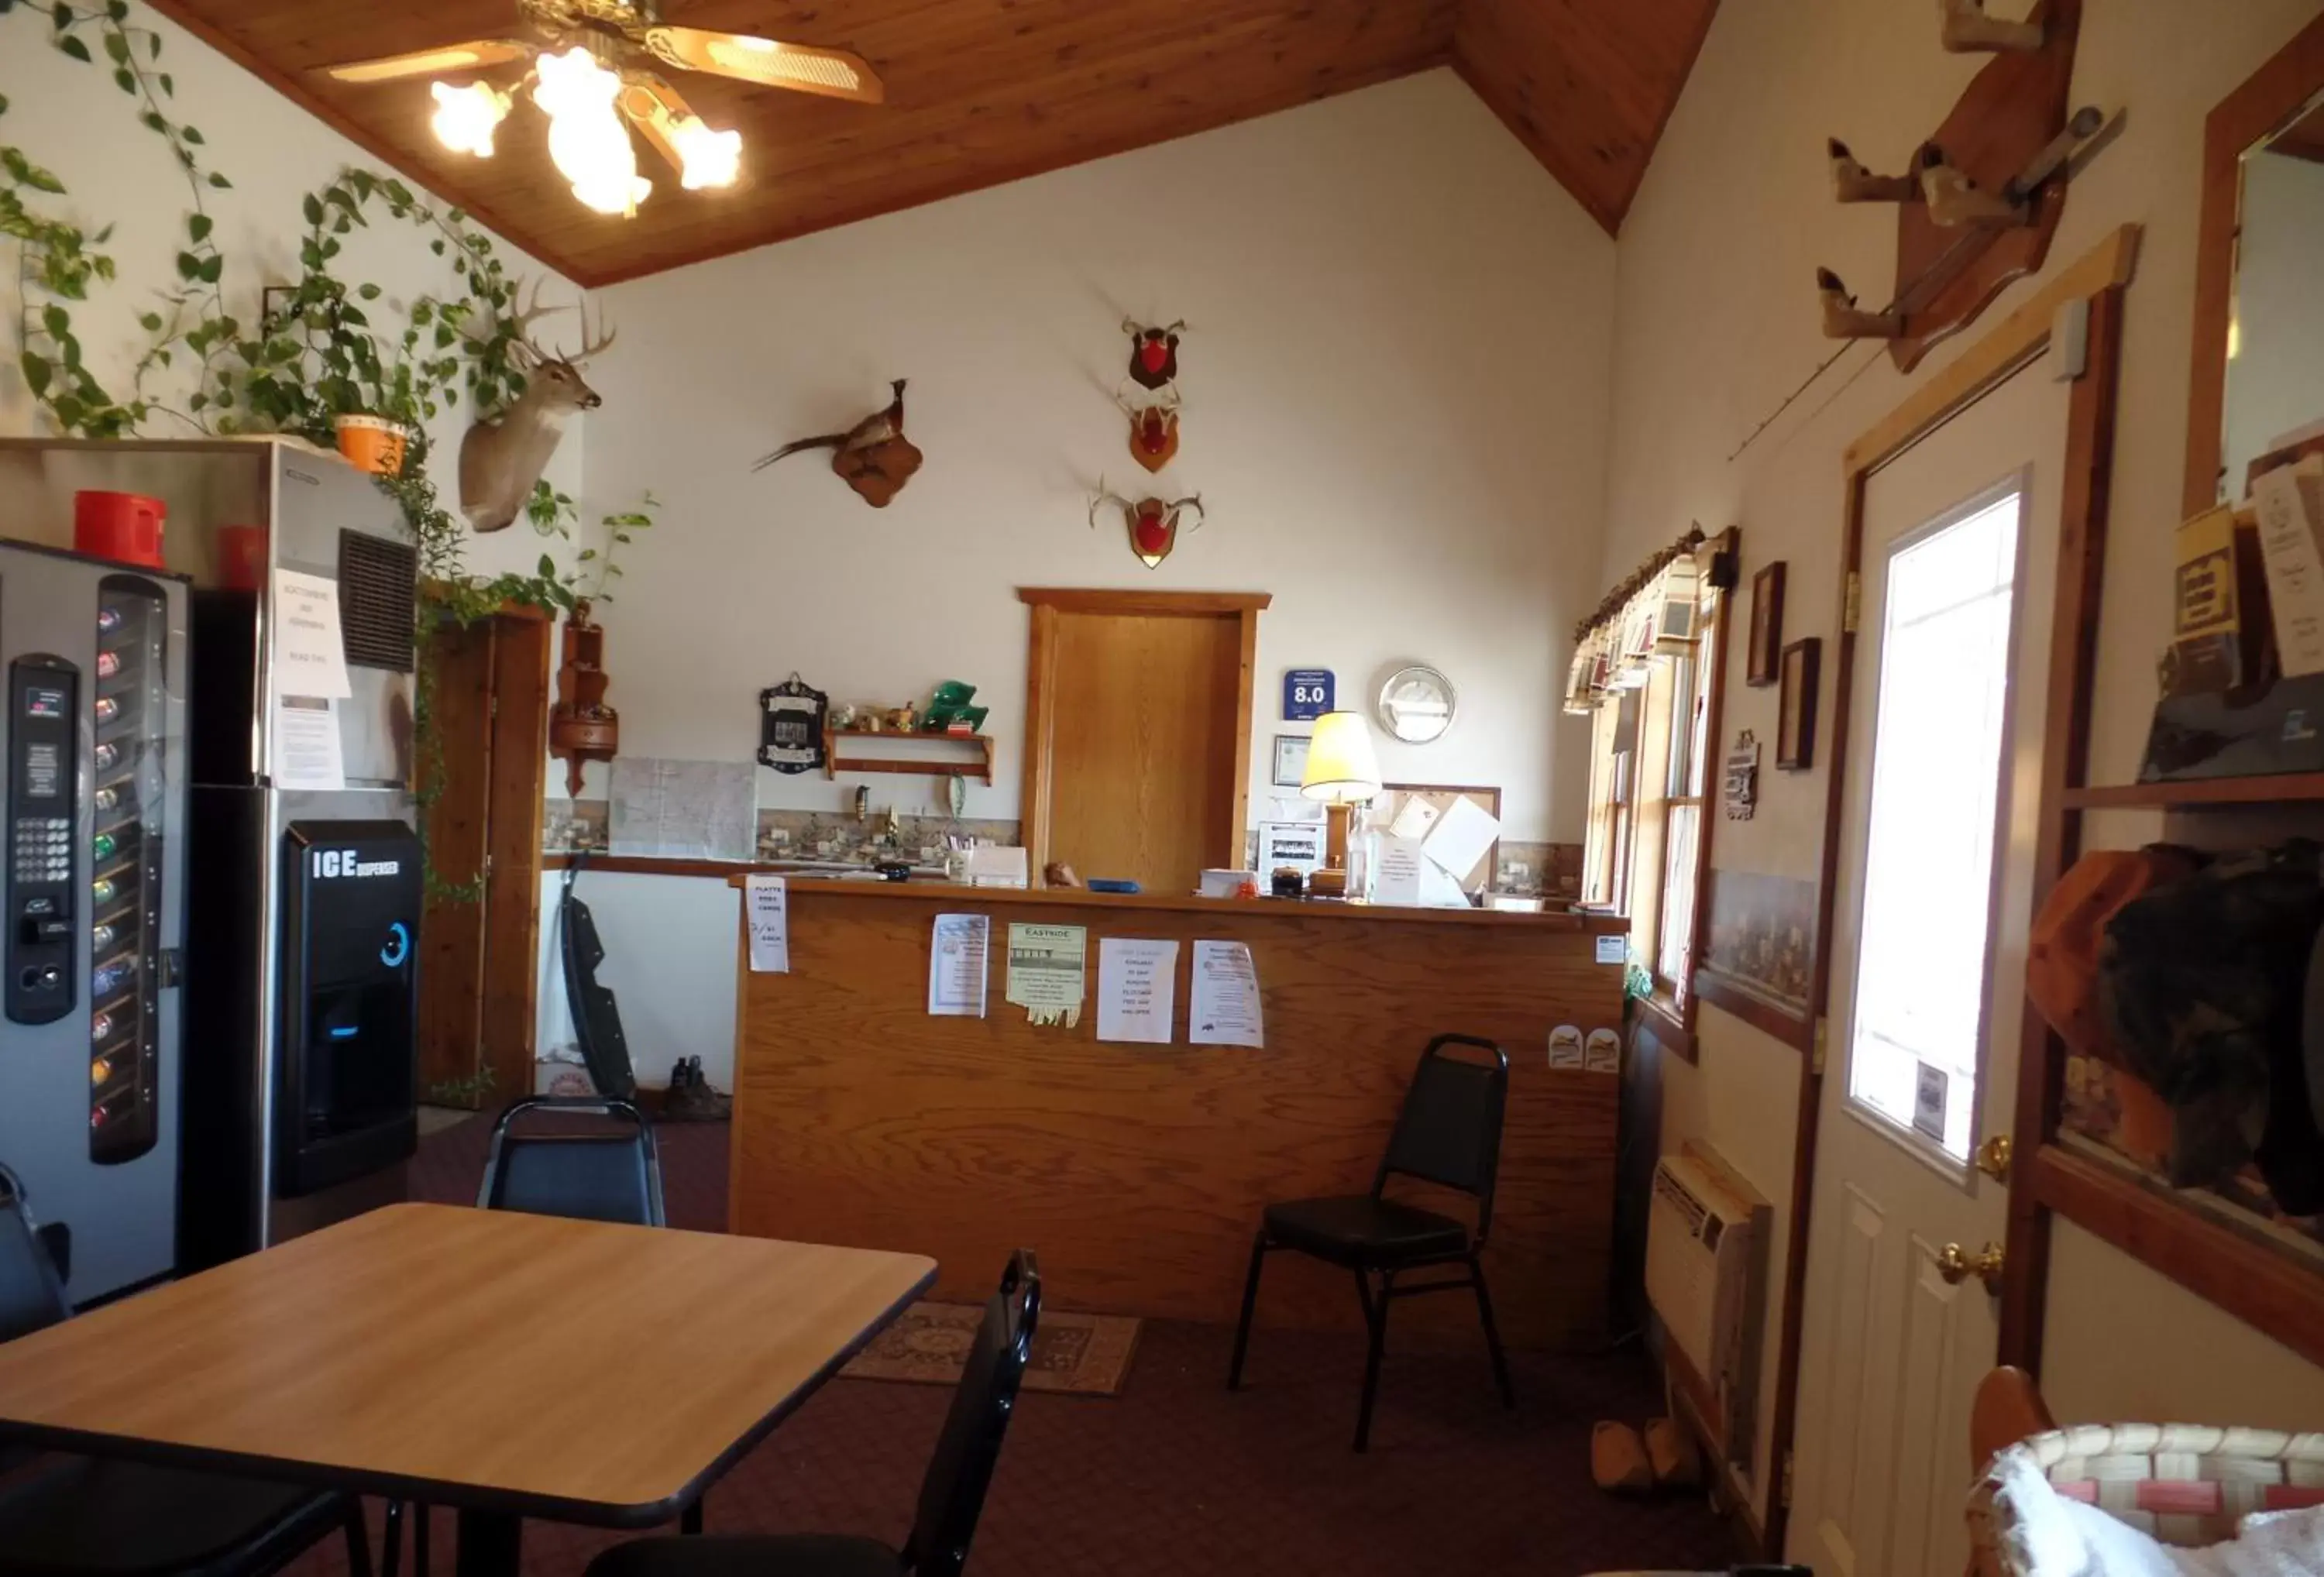 Lobby or reception in Dakota Country Inn